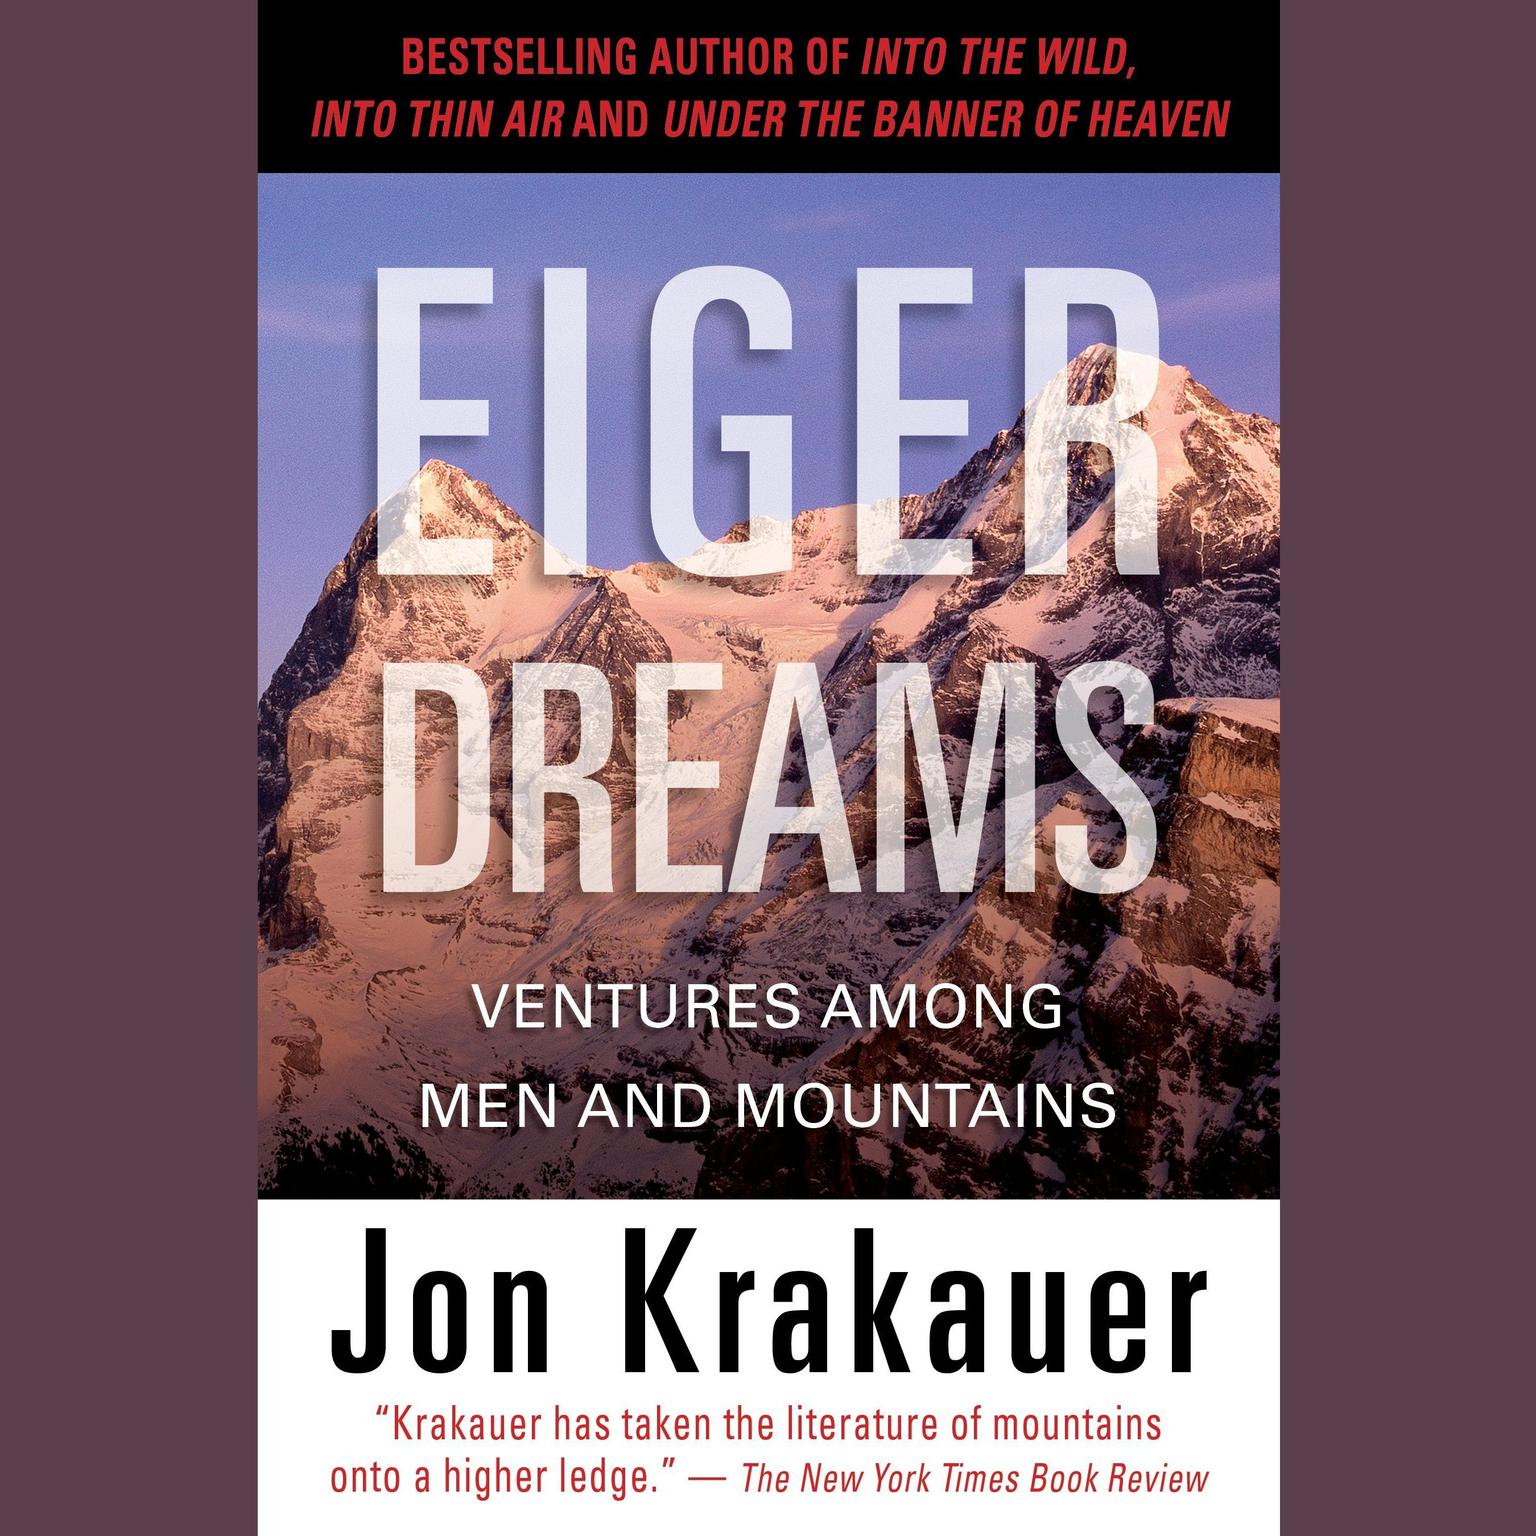 Eiger Dreams (Abridged): Ventures Among Men and Mountains Audiobook, by Jon Krakauer